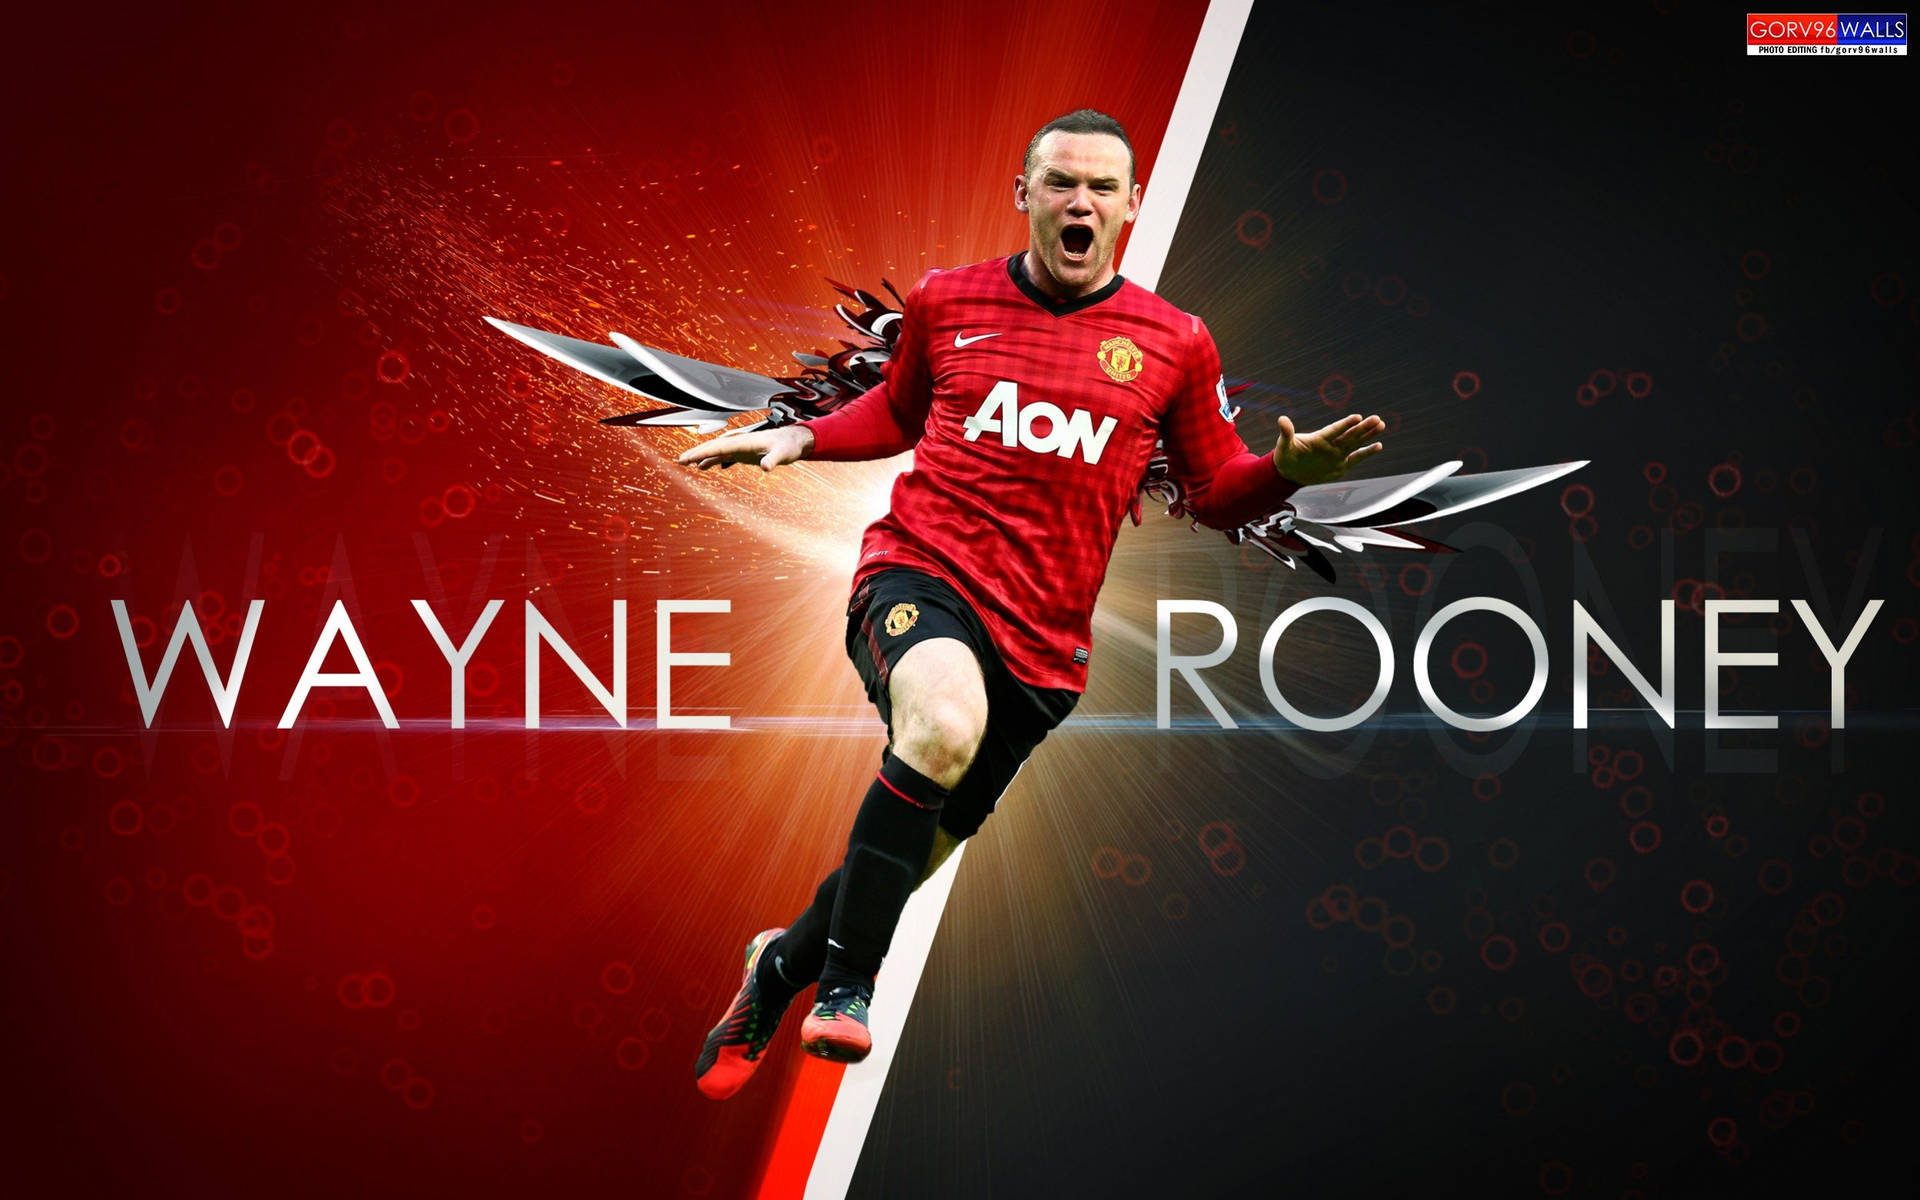 Wayne Rooney Digital Art Picture